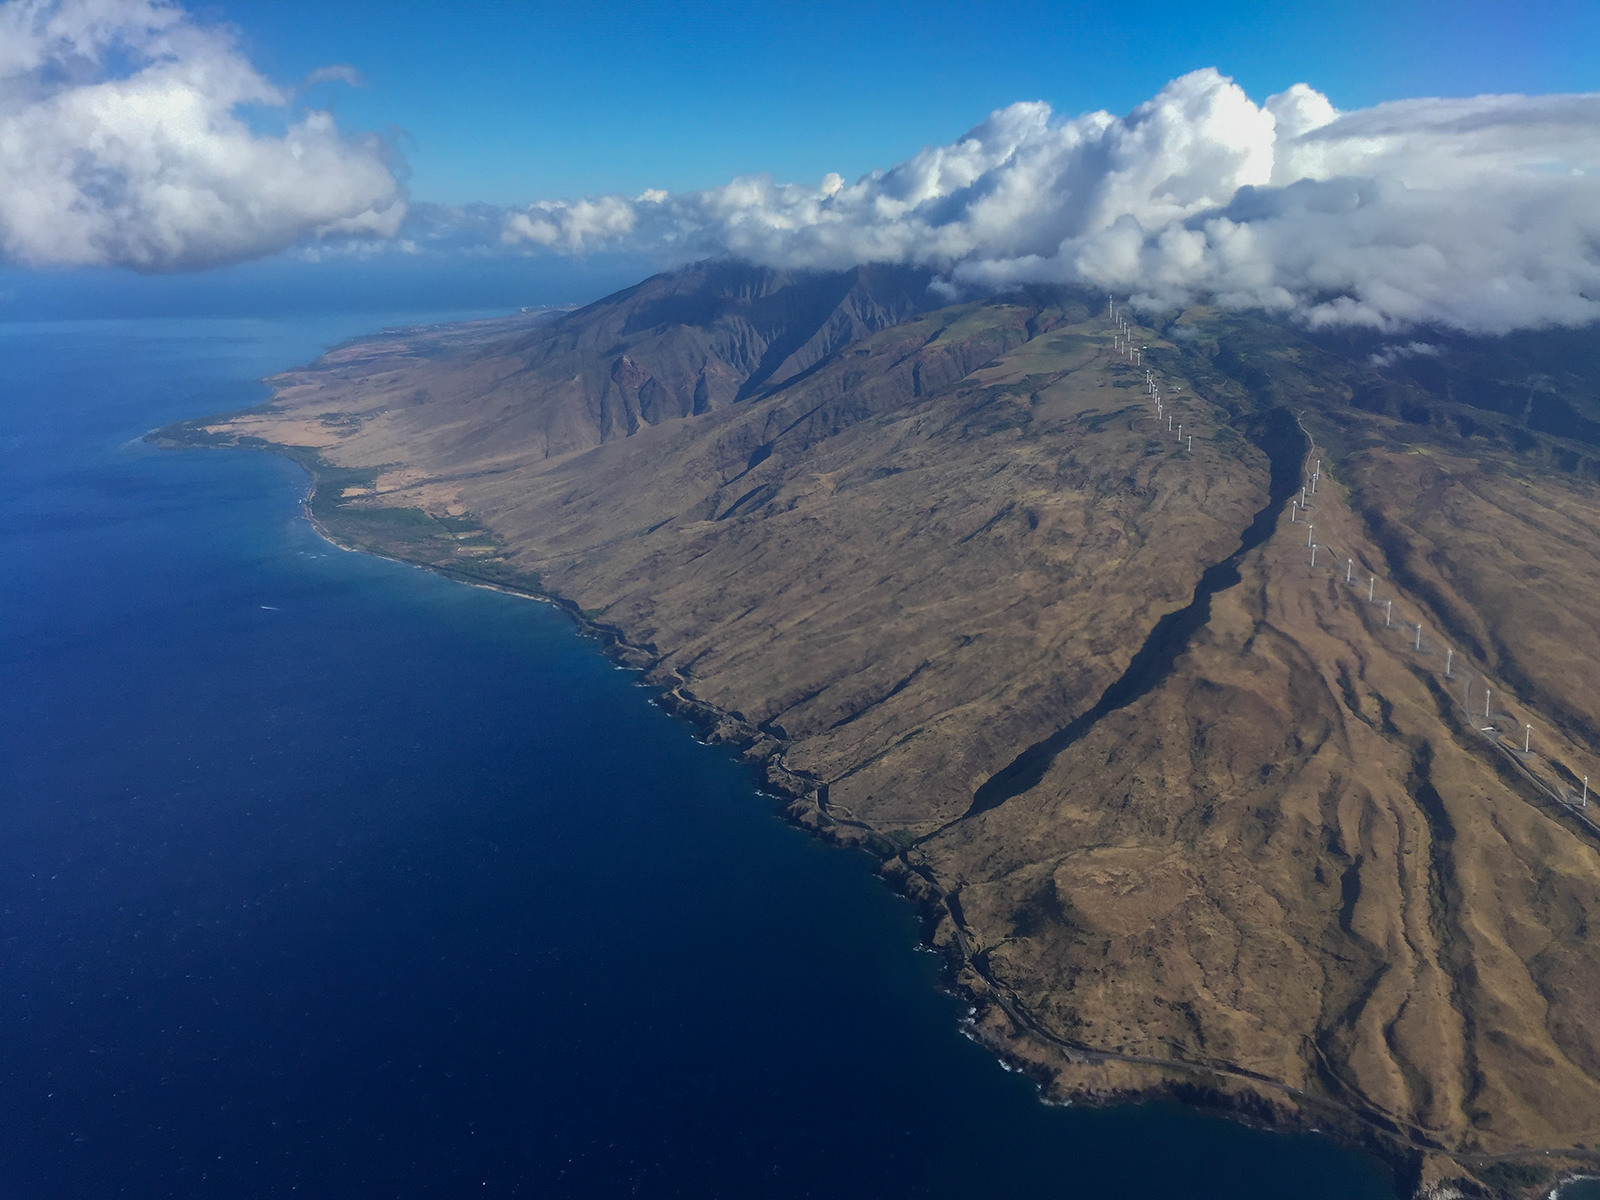 Bird's eye view of Maui coastline